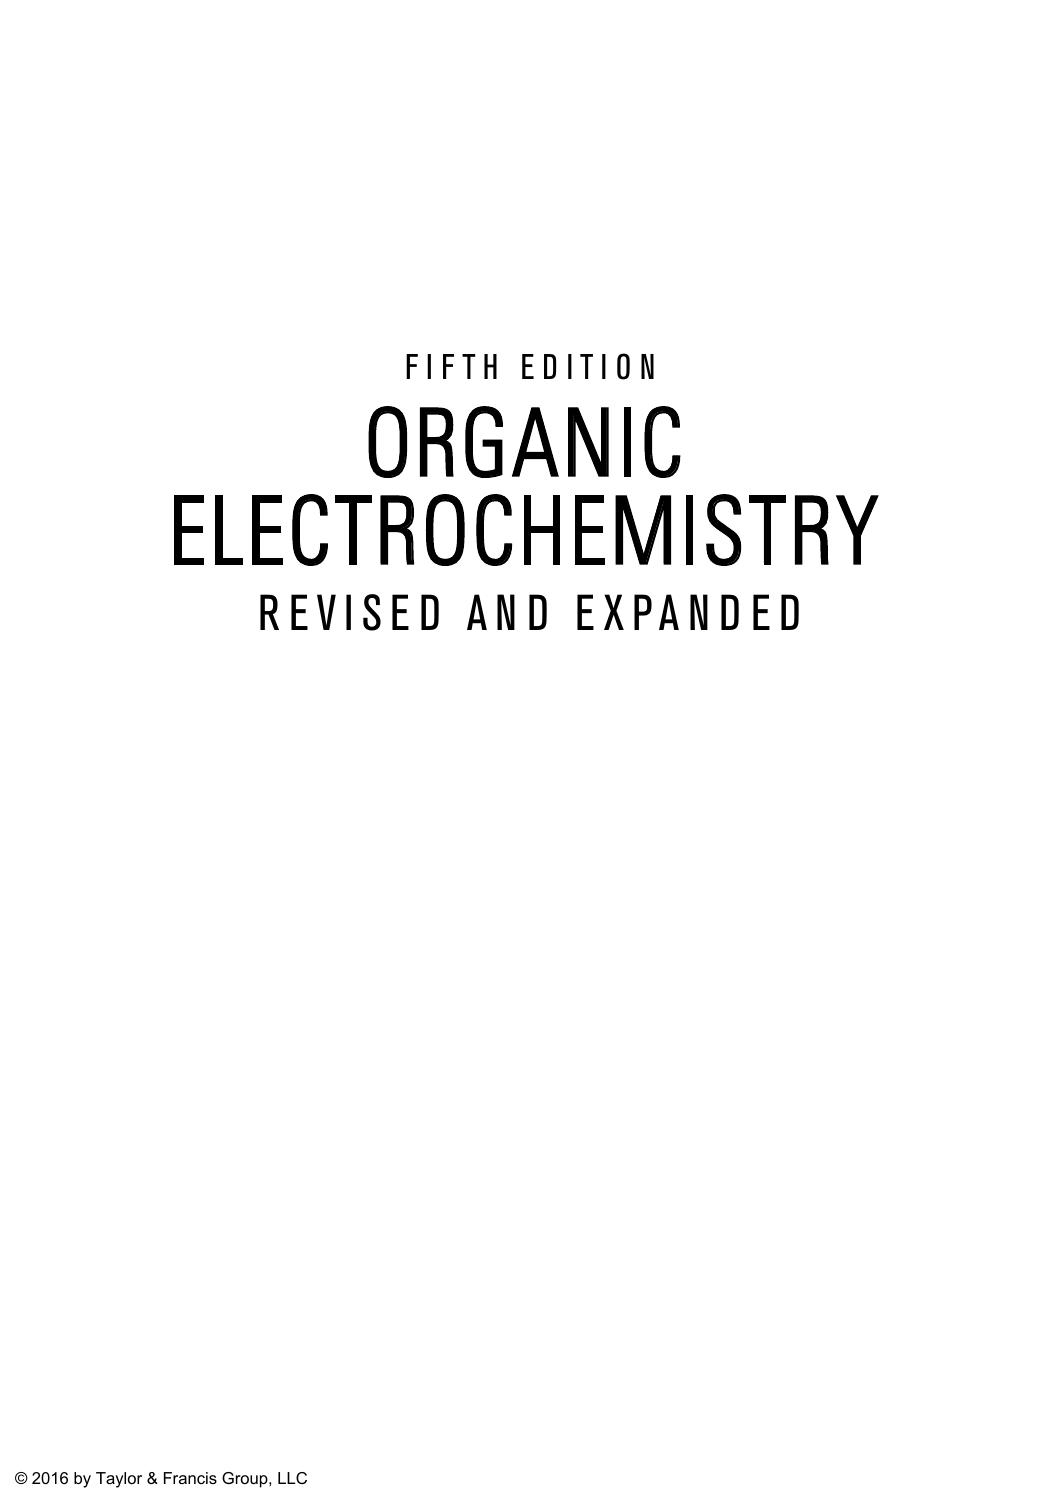 Organic Electrochemistry 2015